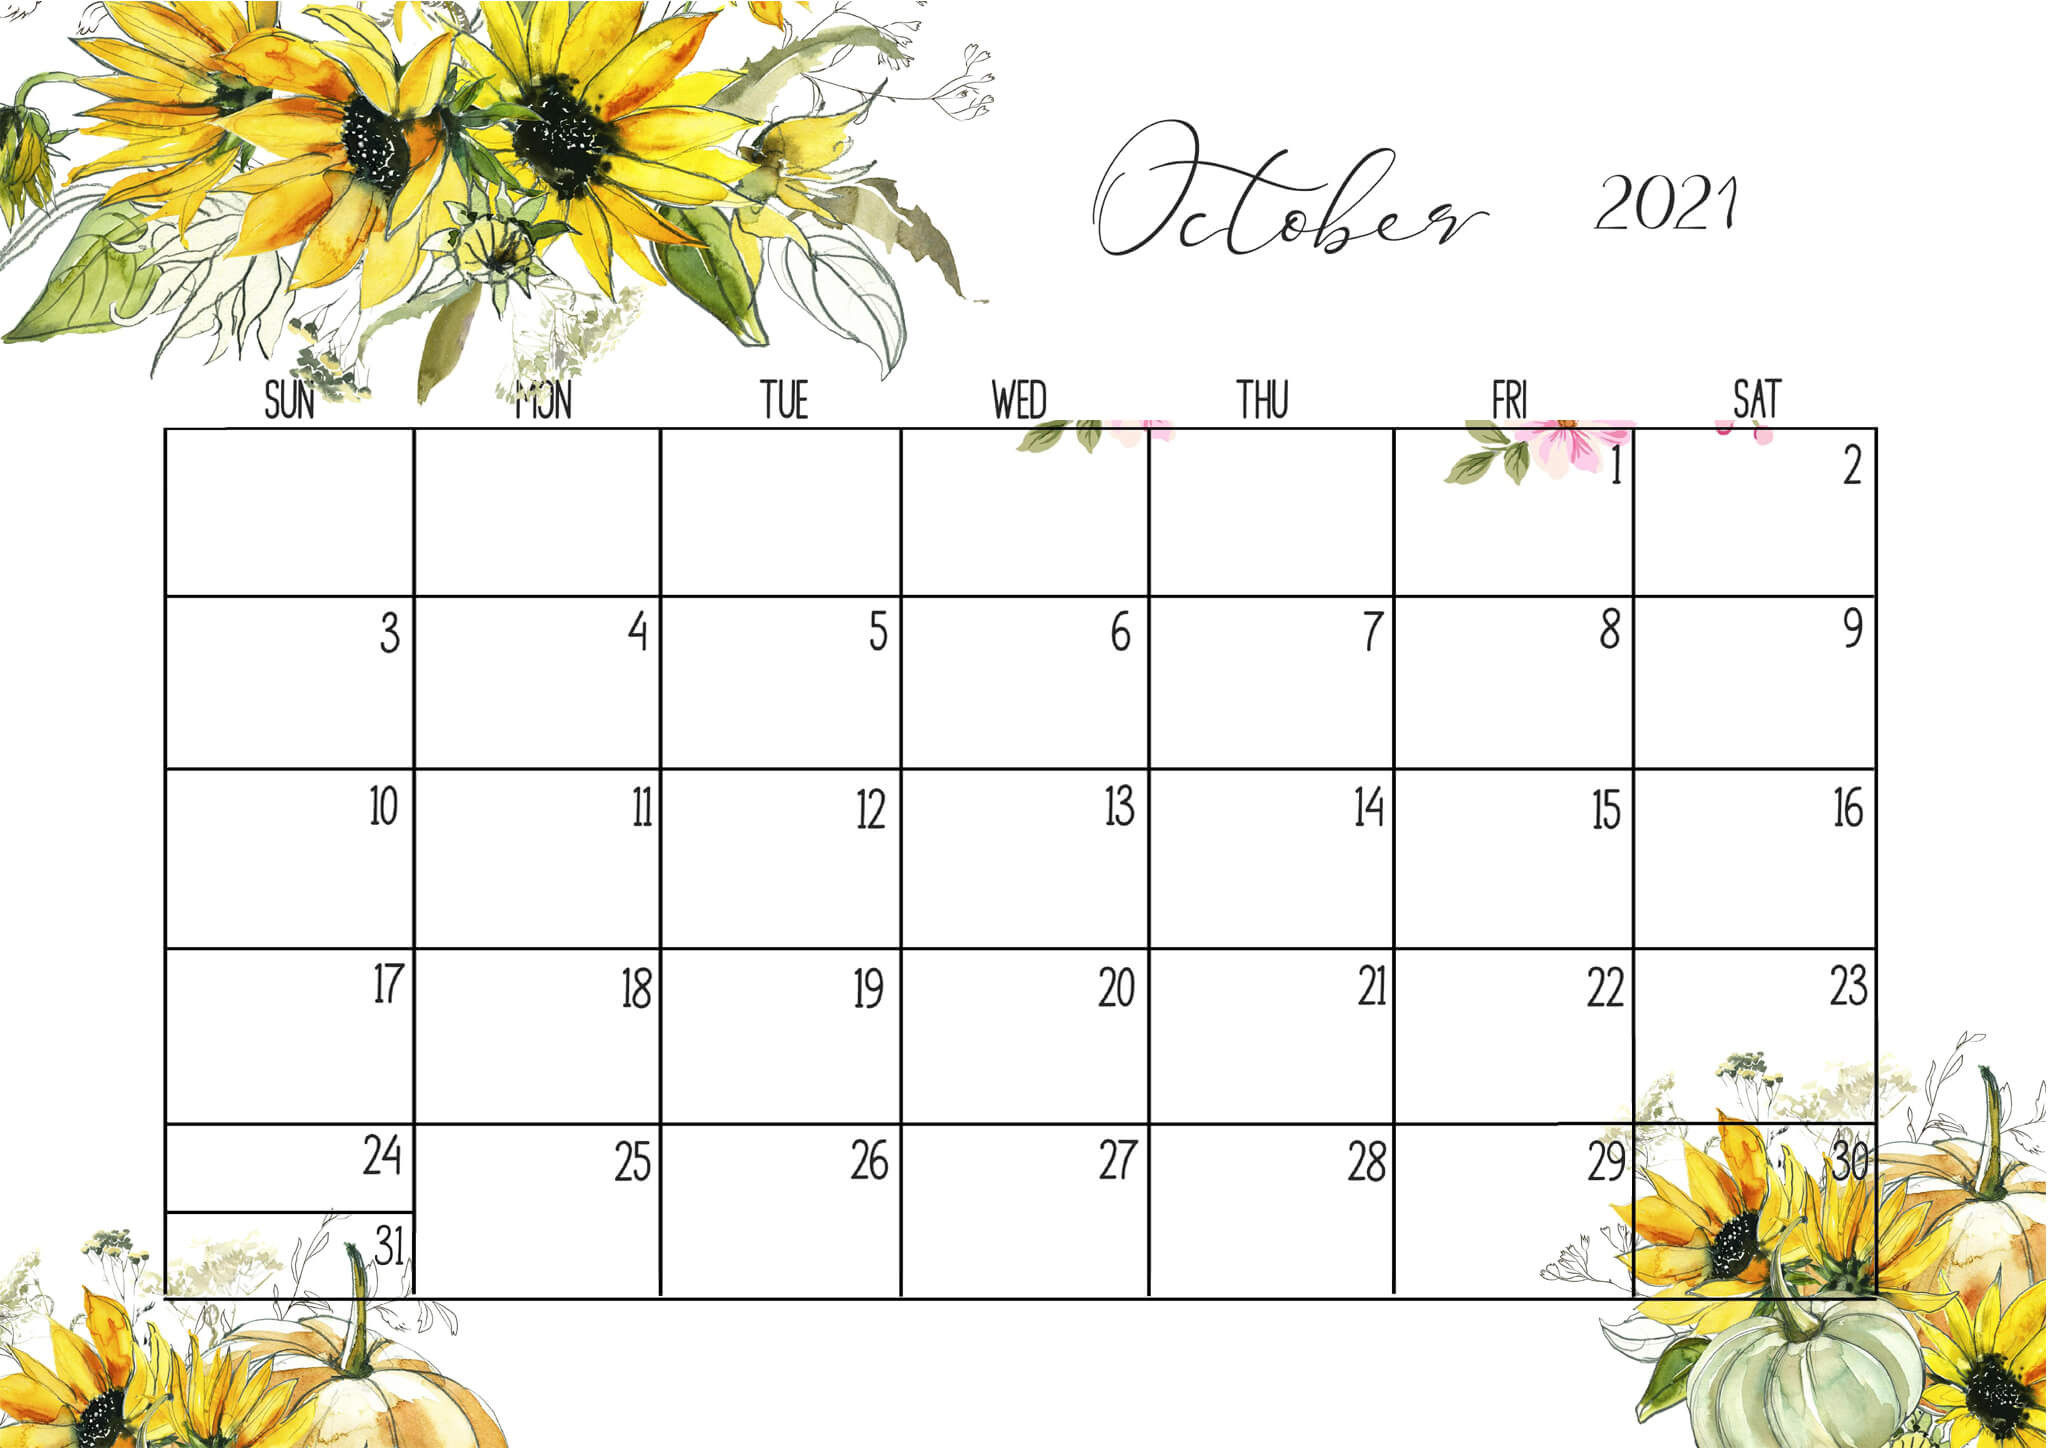 Cute October 2021 Calendar Desk &amp; Wall - Time Management-Calendar 2021 October